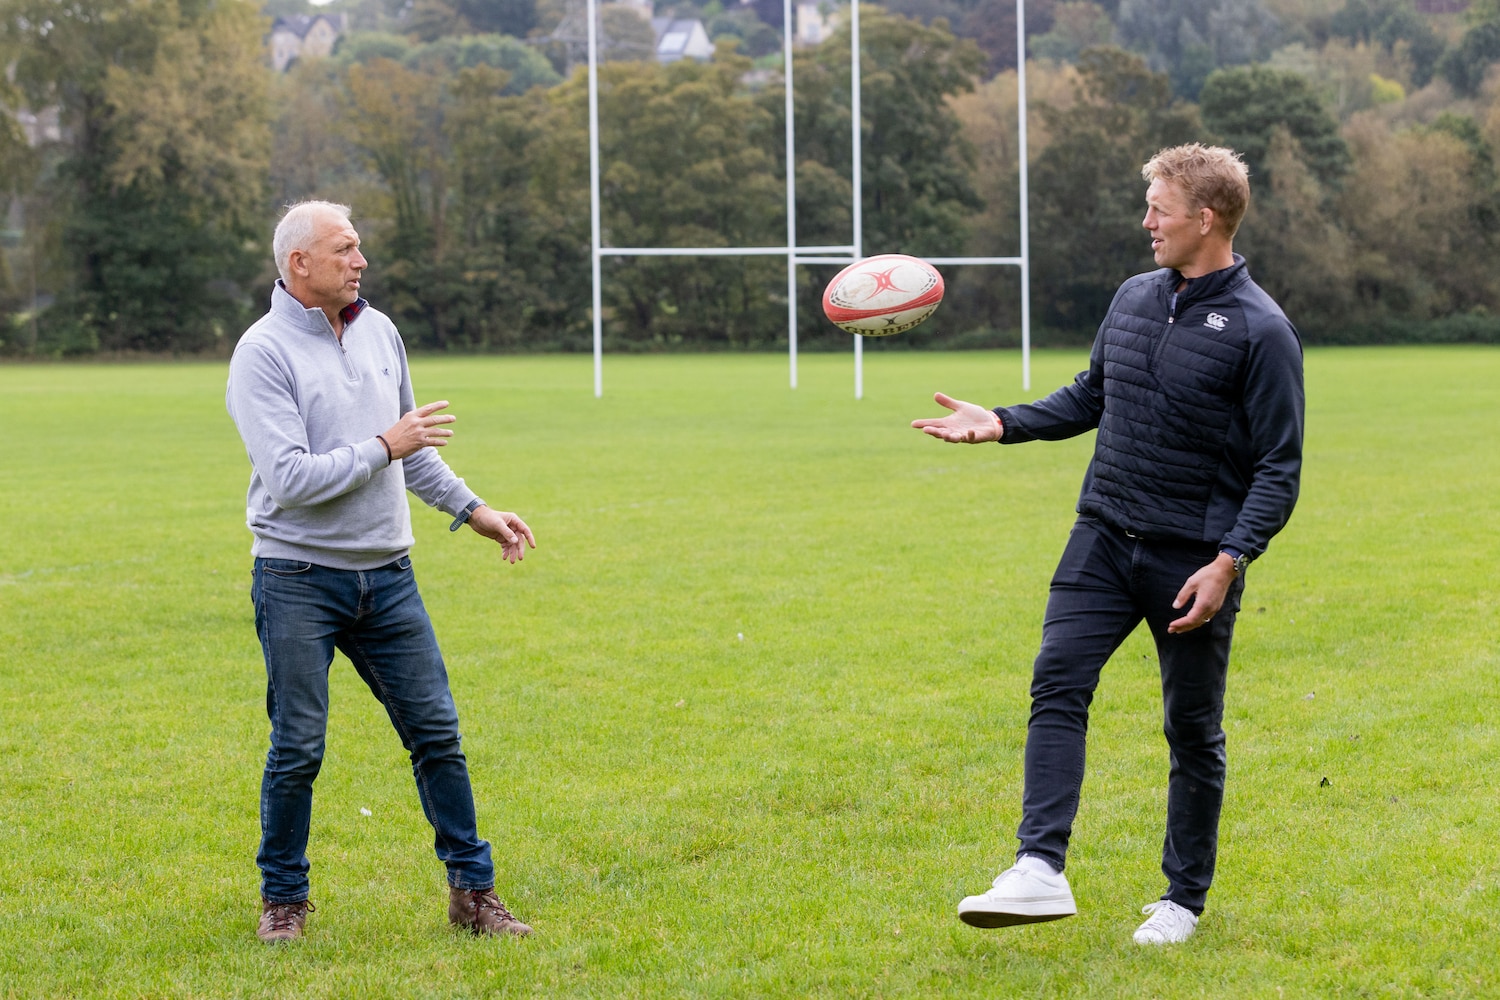 Lewis-Moody-men-talk-end-bladder-shame-tena-rugby-with-coach2.jpg                                                                                                                                                                                                                                                                                                                                                                                                                                                   